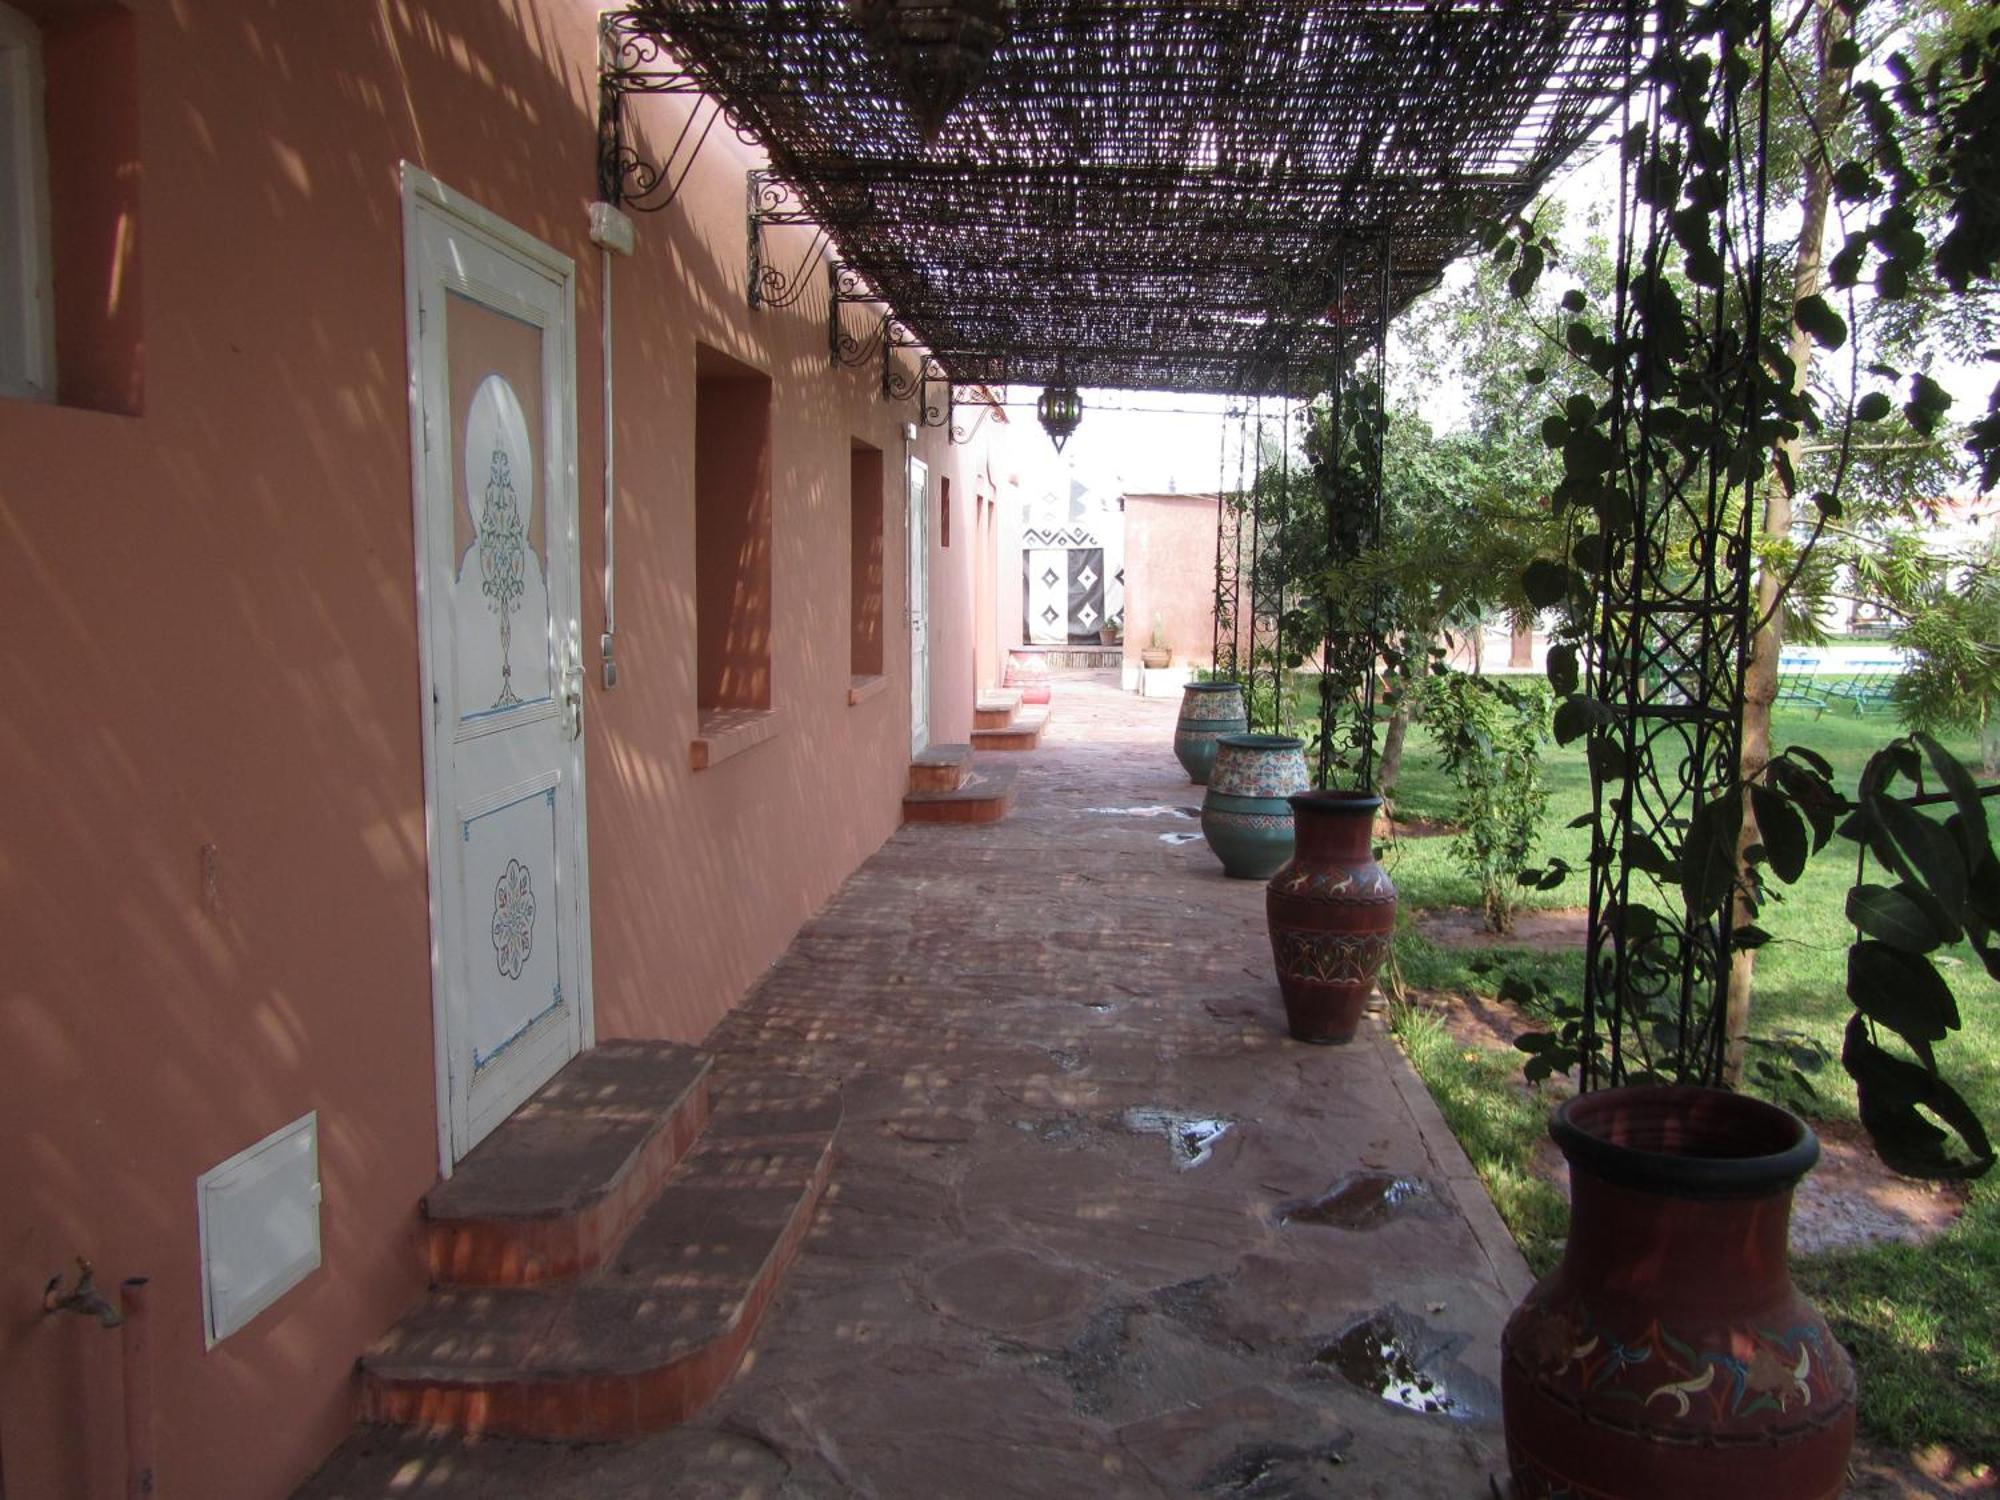 Residence Habiba Μαρακές Εξωτερικό φωτογραφία